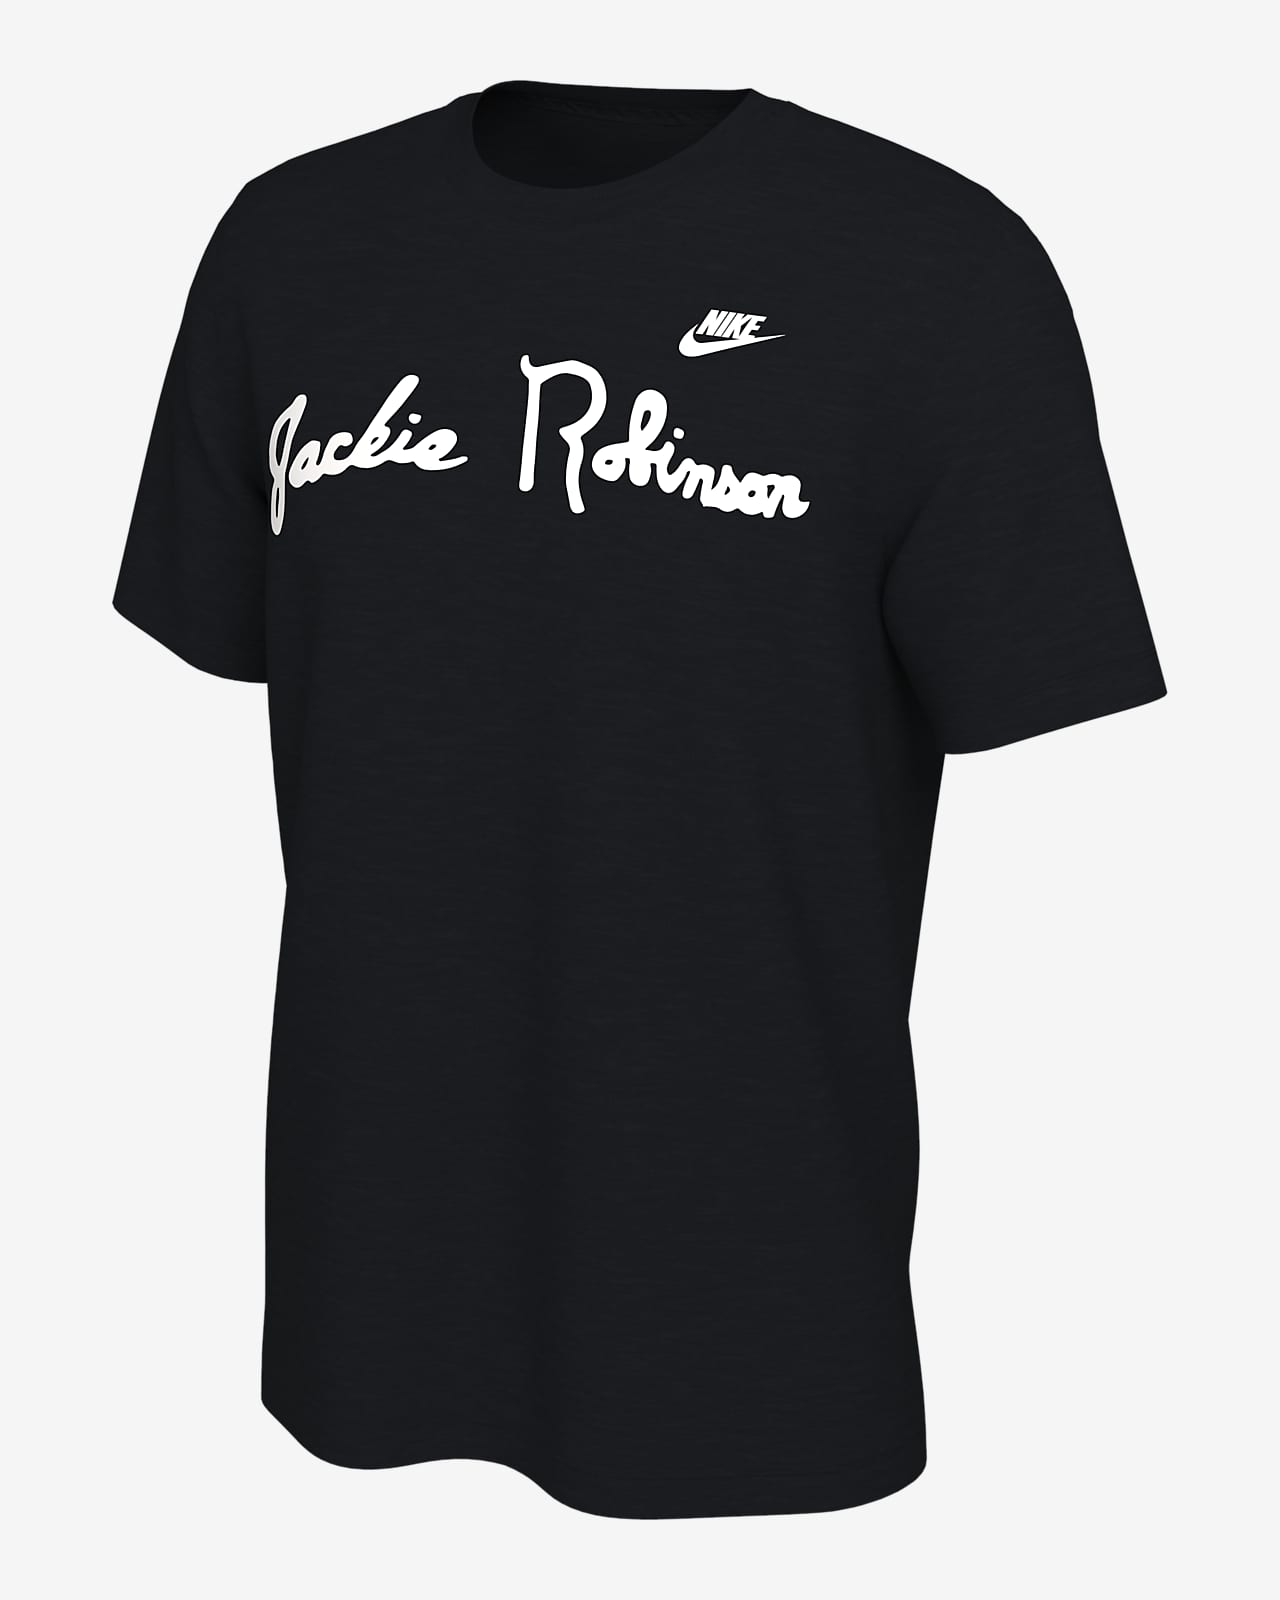 Jackie Robinson Men's Nike Baseball T-Shirt